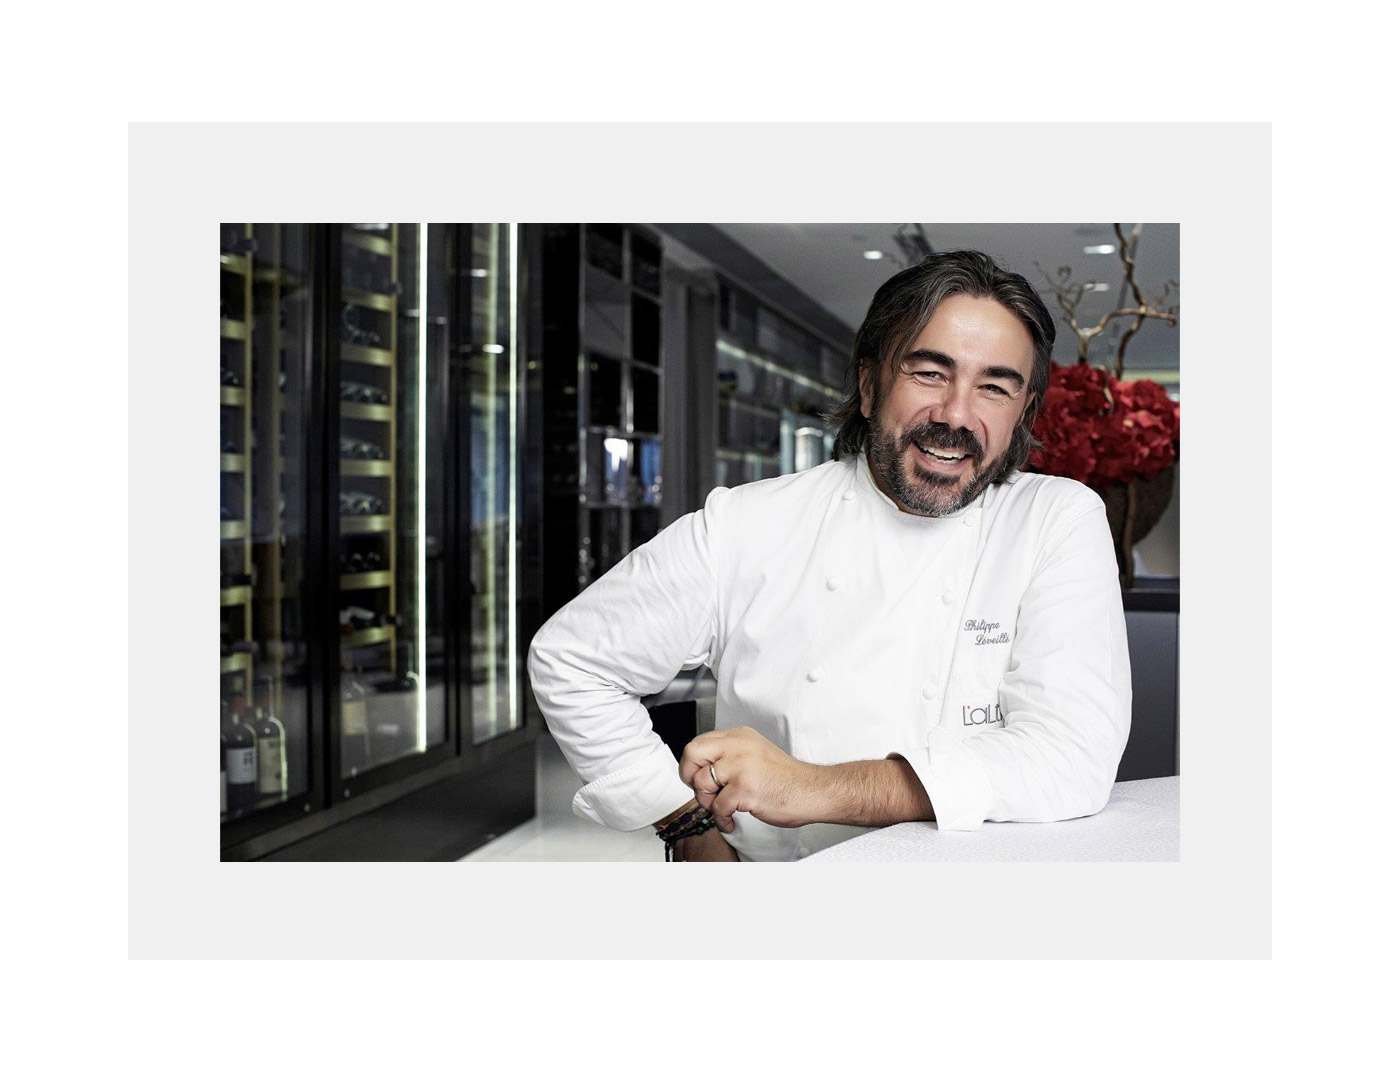 miramonti l'altro philippe léveillé chef Michelin star restaurant italian made in italy Stellato minimaldesign minimal